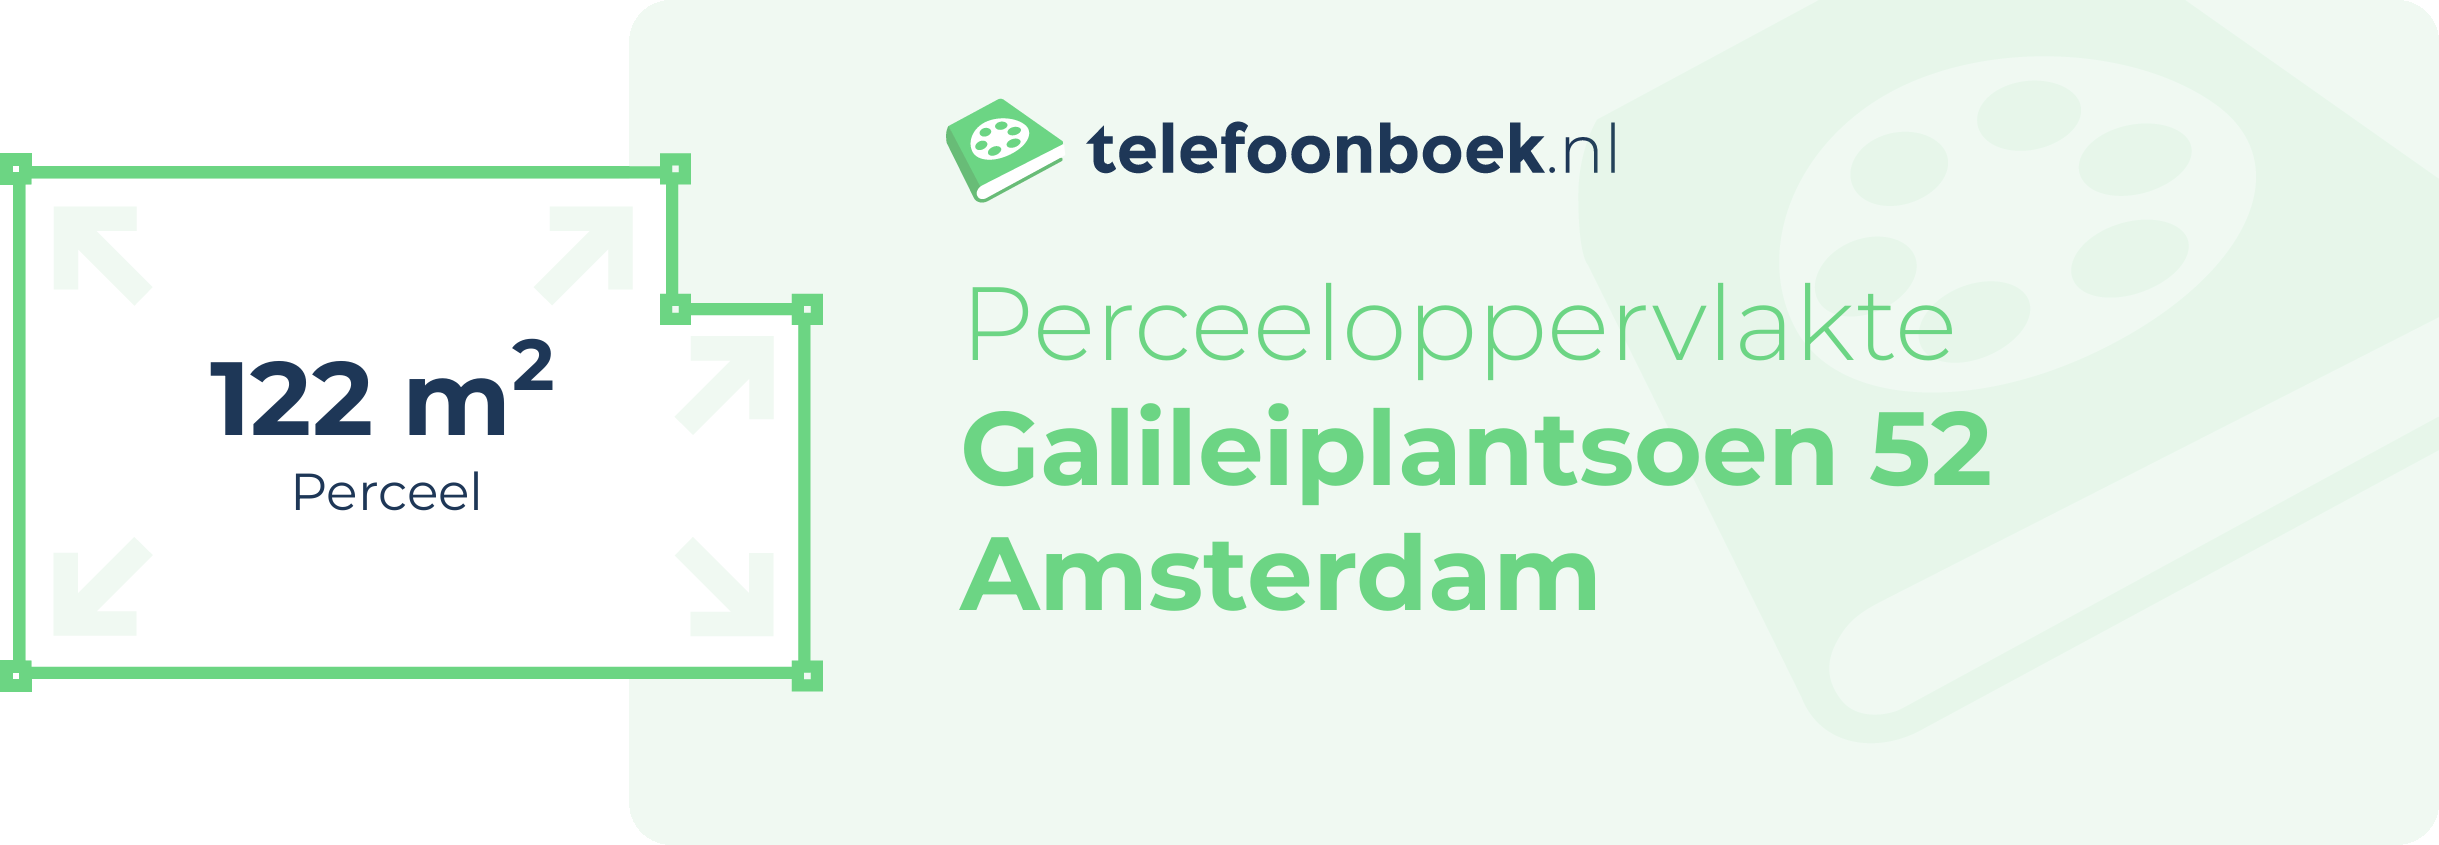 Perceeloppervlakte Galileiplantsoen 52 Amsterdam